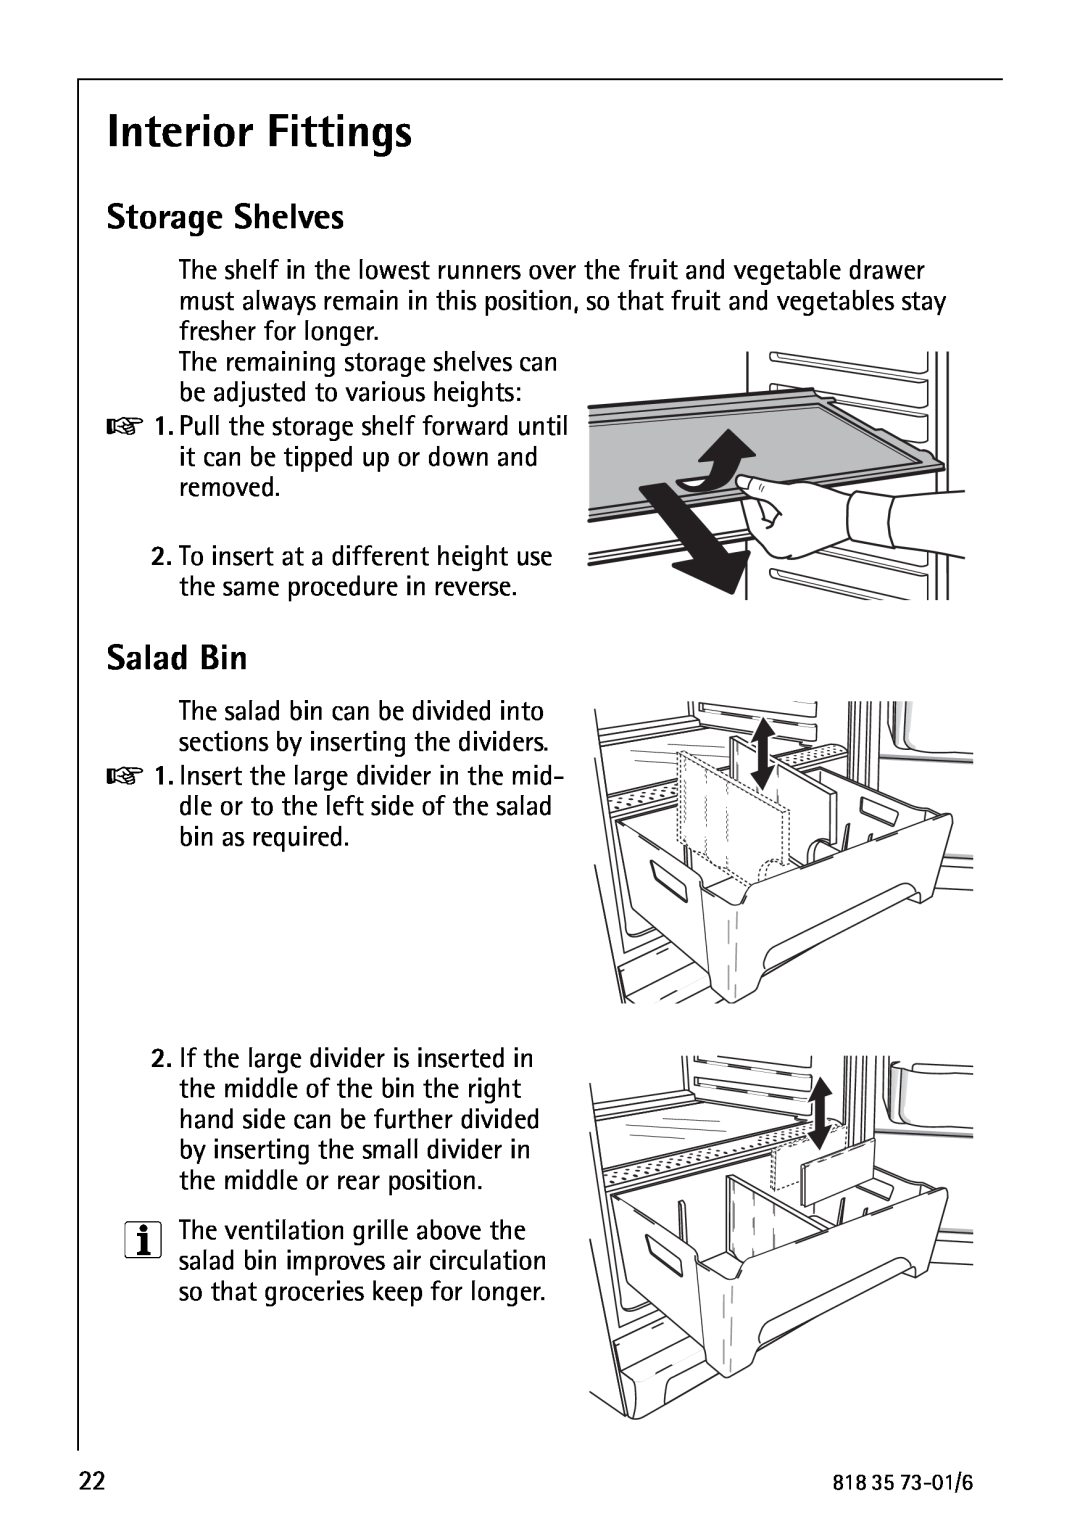 Electrolux SANTO 72340 KA operating instructions Interior Fittings, Storage Shelves, Salad Bin 